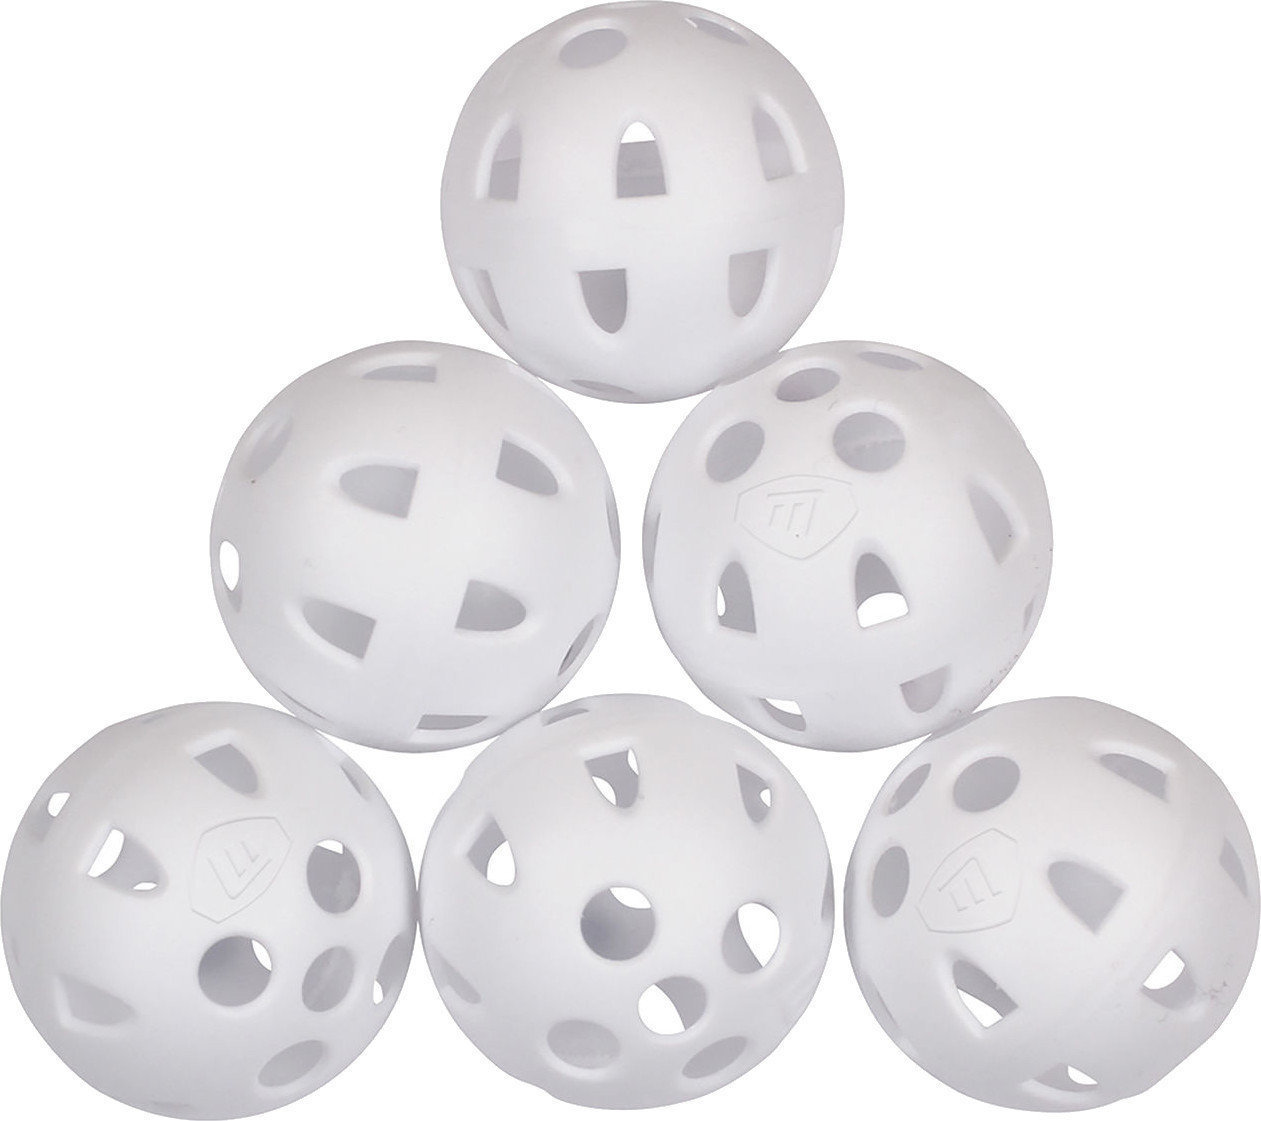 Žogice za trening Masters Golf Airflow XP White Žogice za trening